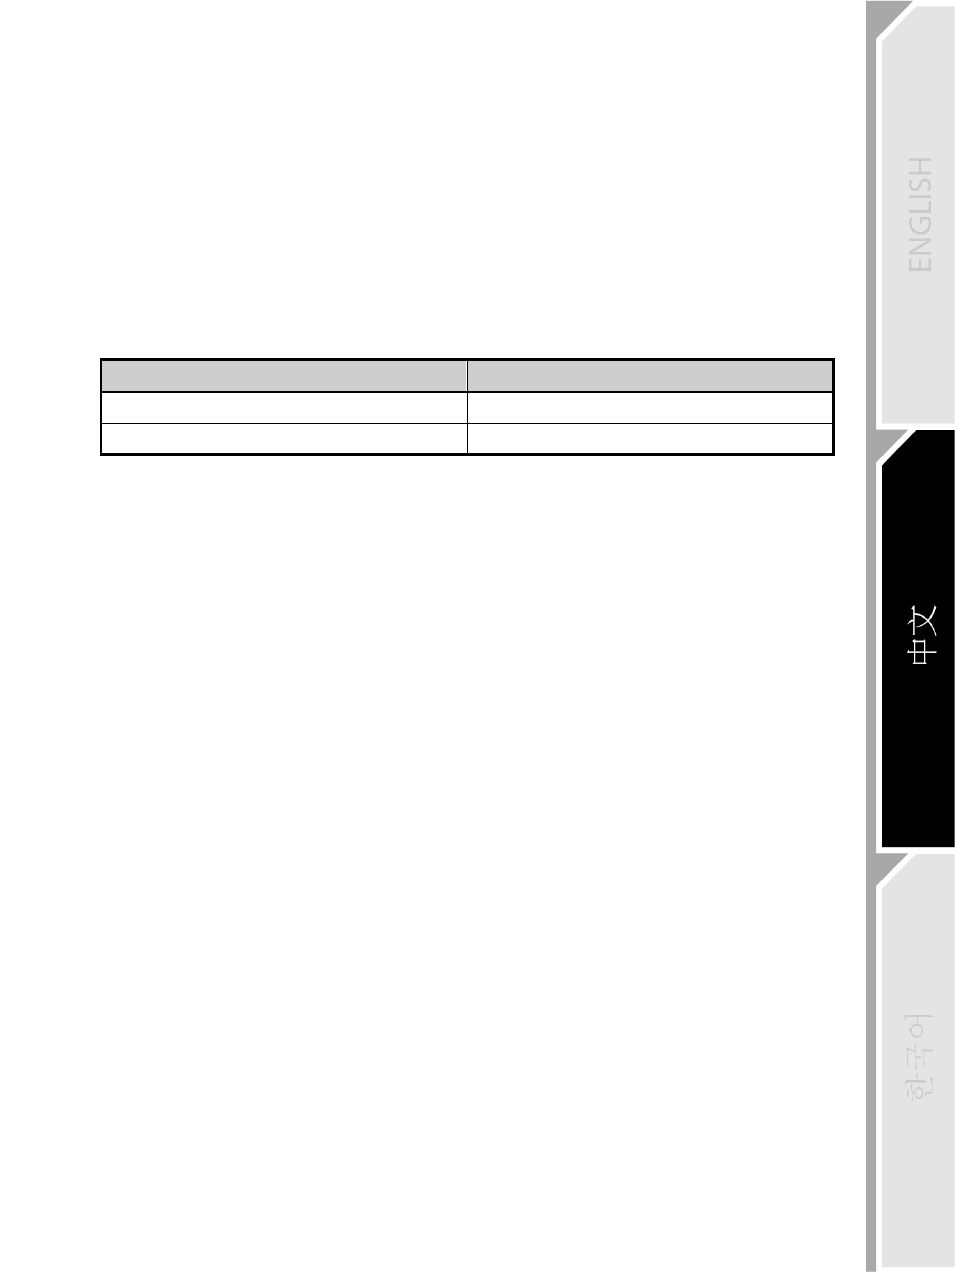 Mode 模式 按鈕與指示燈 Thrustmaster 產品系列的相容性 輔助資料與常見問題 不包含在此說明書內 Thrustmaster T300 Ferrari Gte User Manual Page